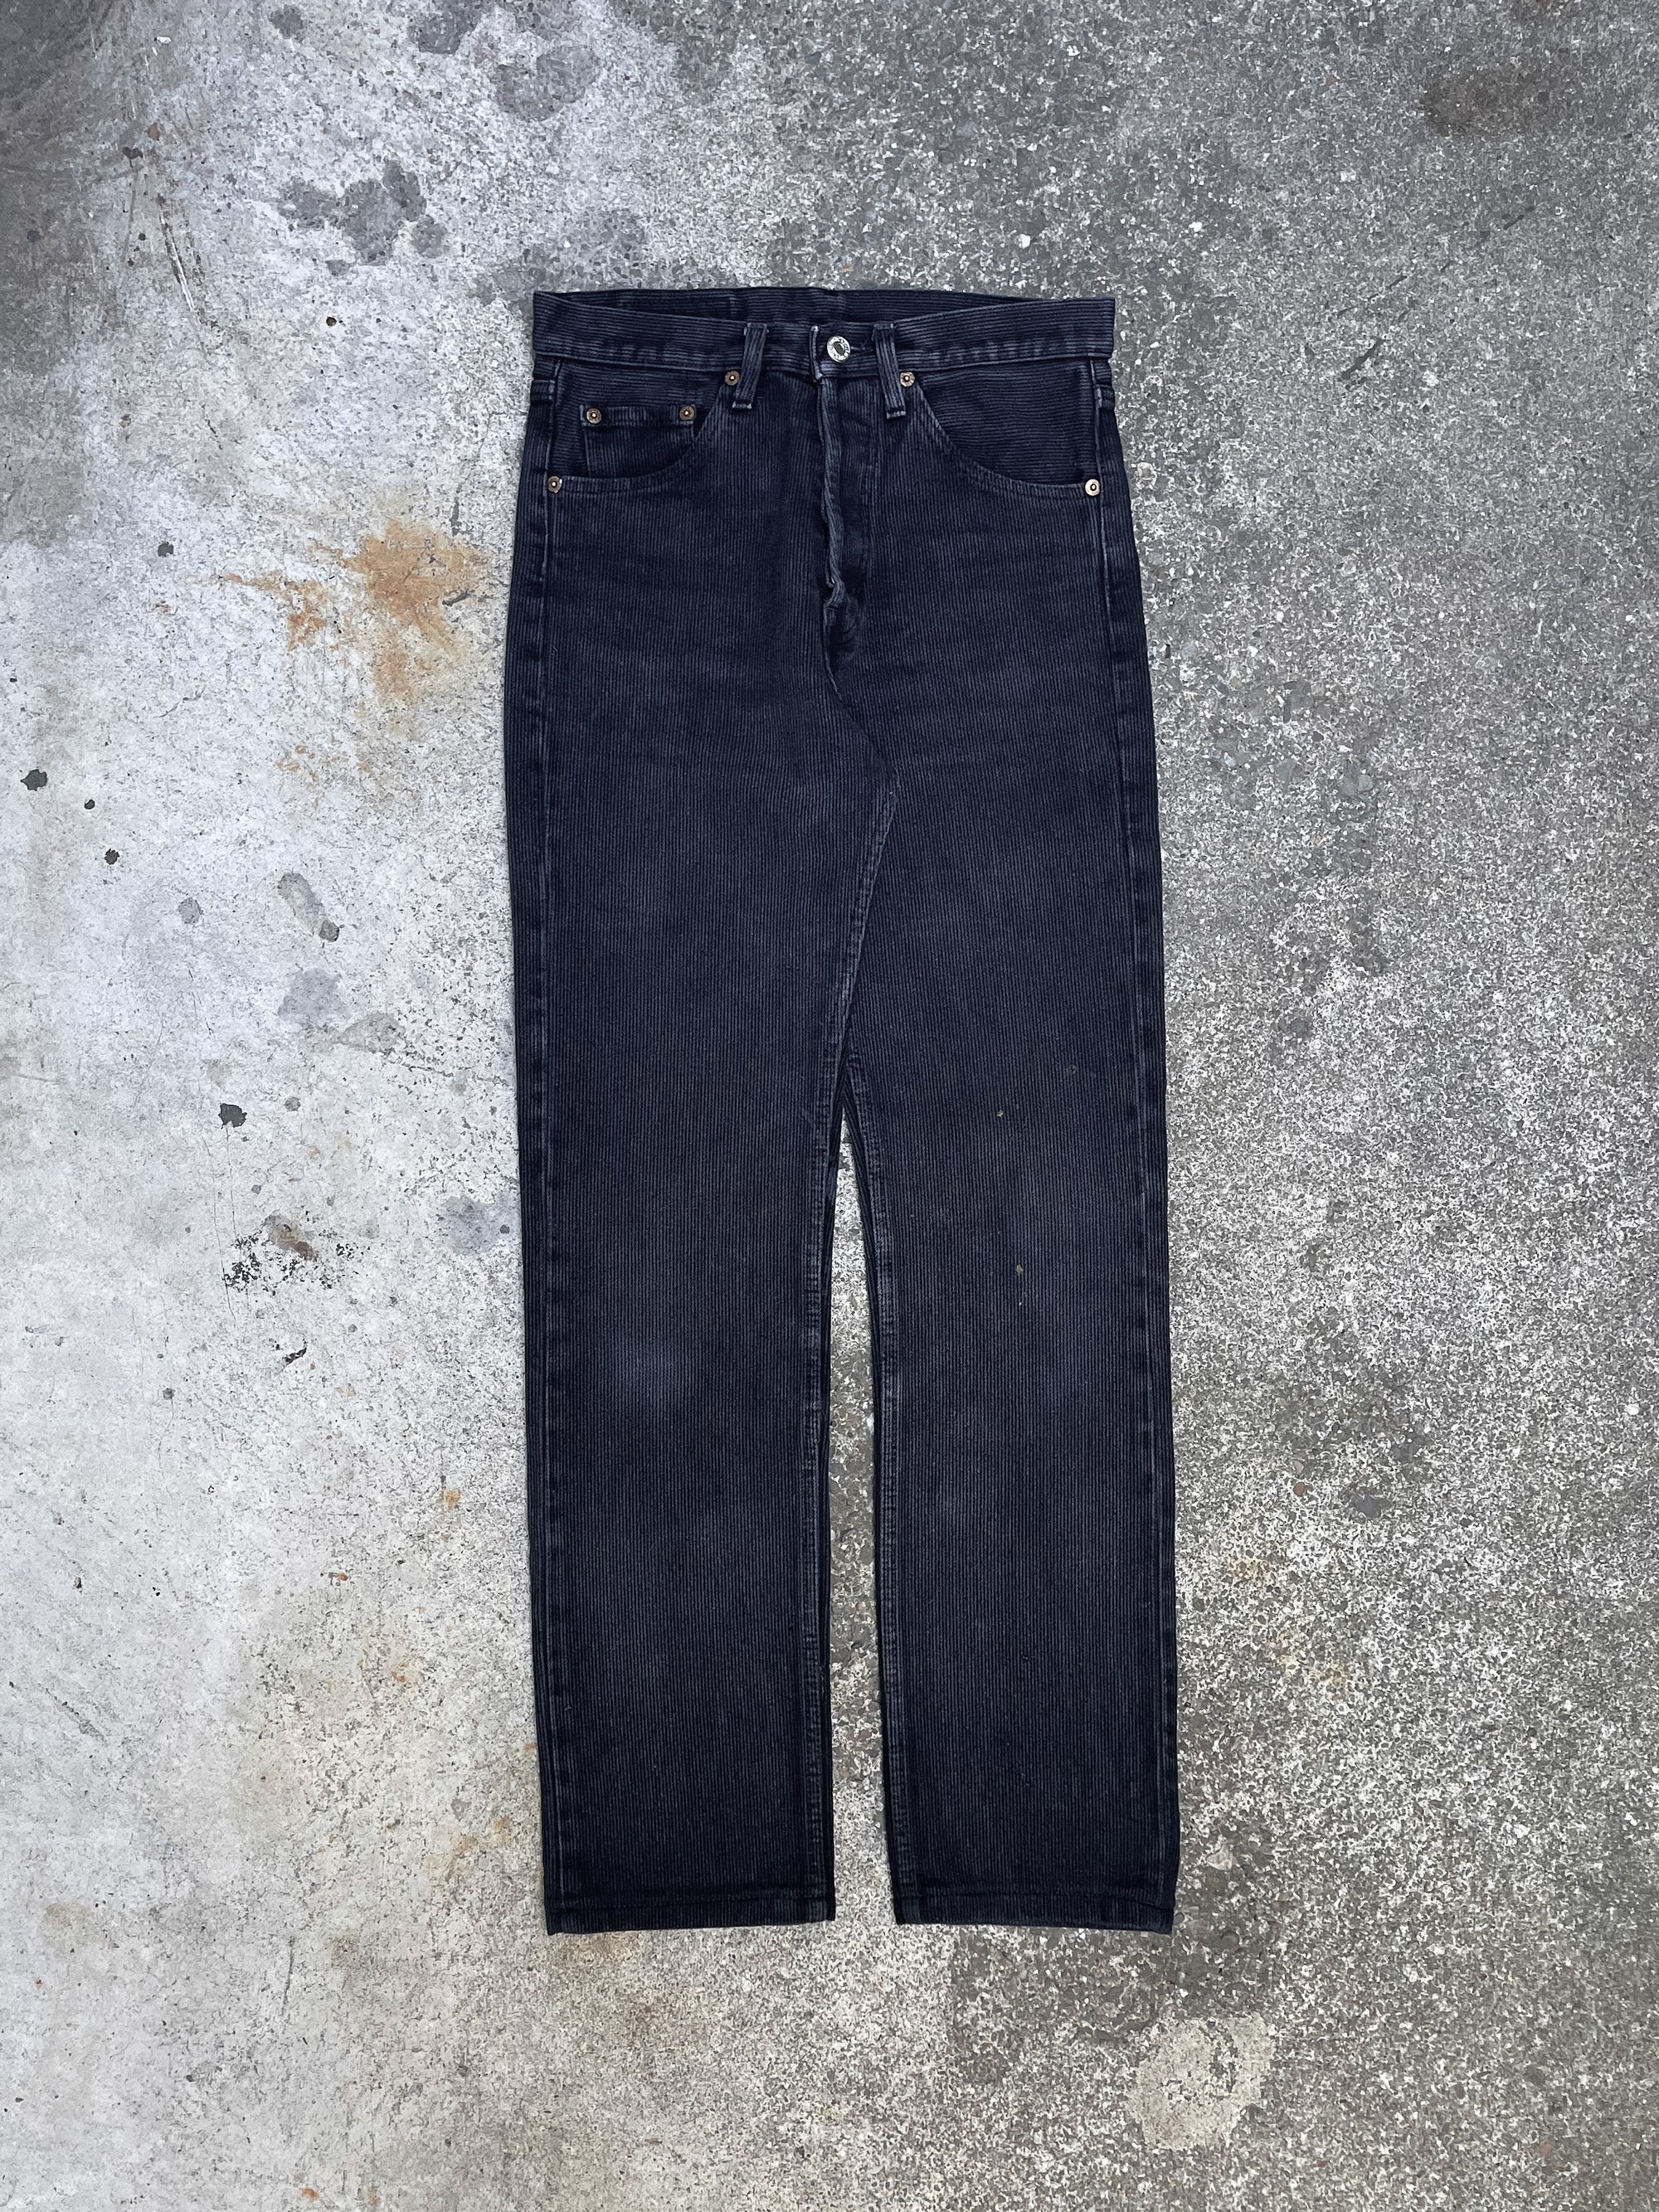 1990s Levi’s Faded Blue Black Pique Cotton Twill 501 (27X28)